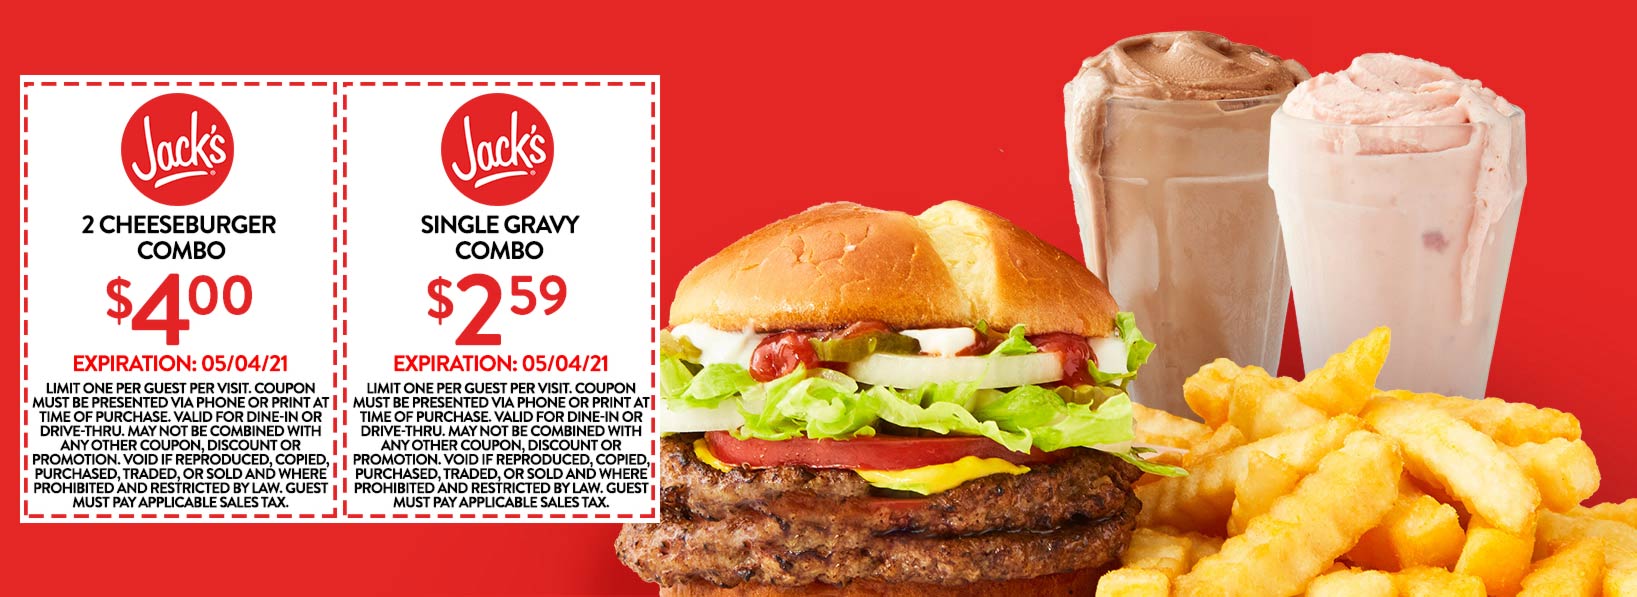 Jacks restaurants Coupon  $4 two cheeseburger combo meal & more at Jacks #jacks 